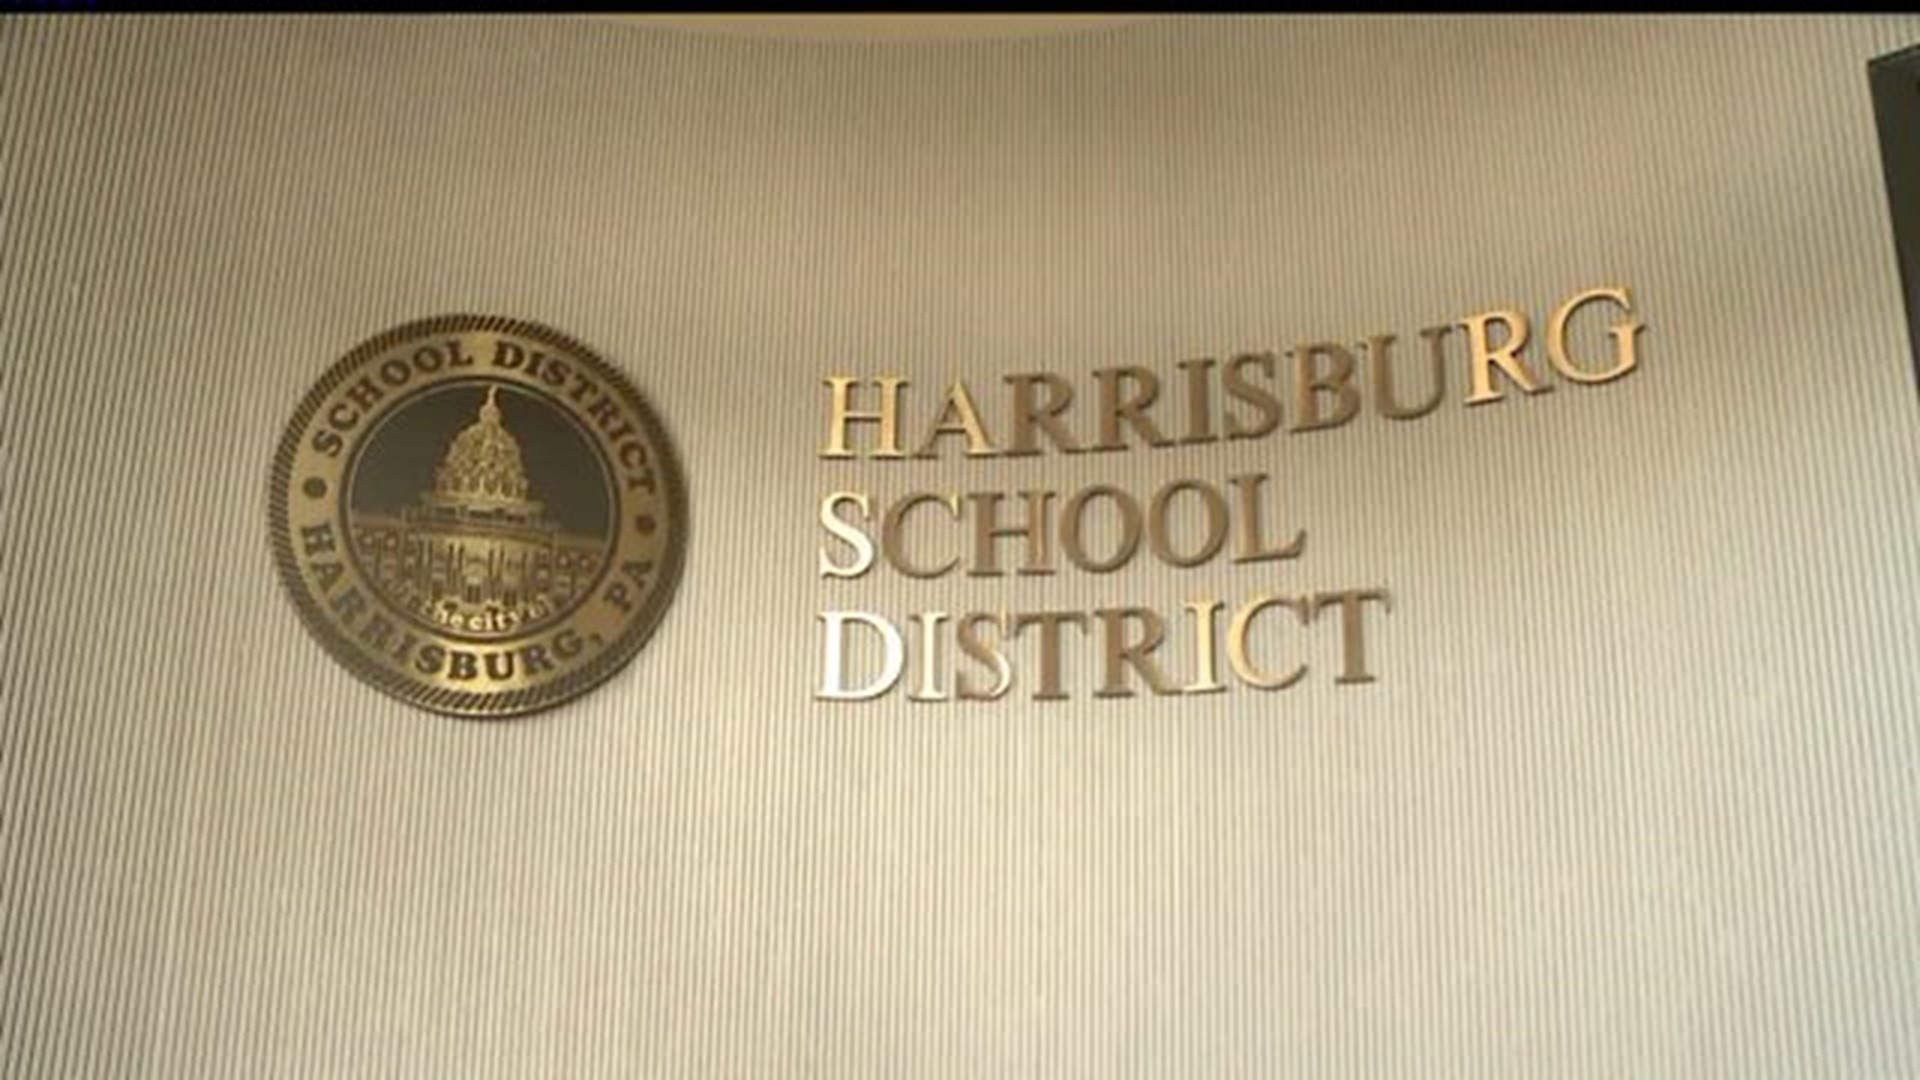 Harrisburg School District Budget surplus